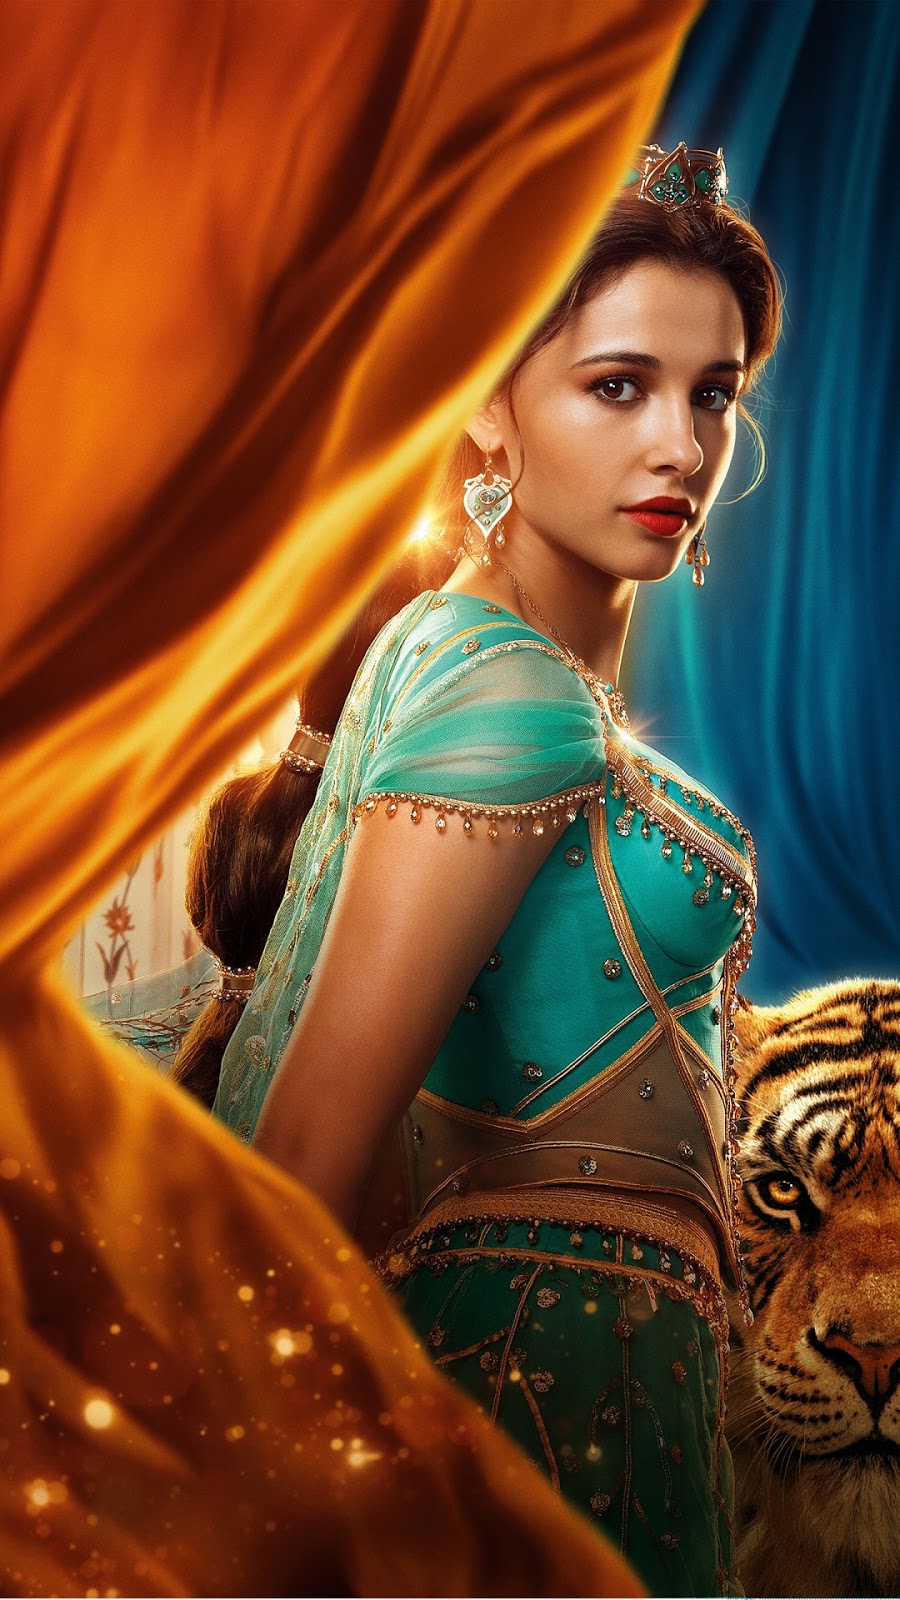 Naomi Scott As Princess Jasmine In Aladdin 2019 Mobile Wallpaper Hd Mobile Walls 